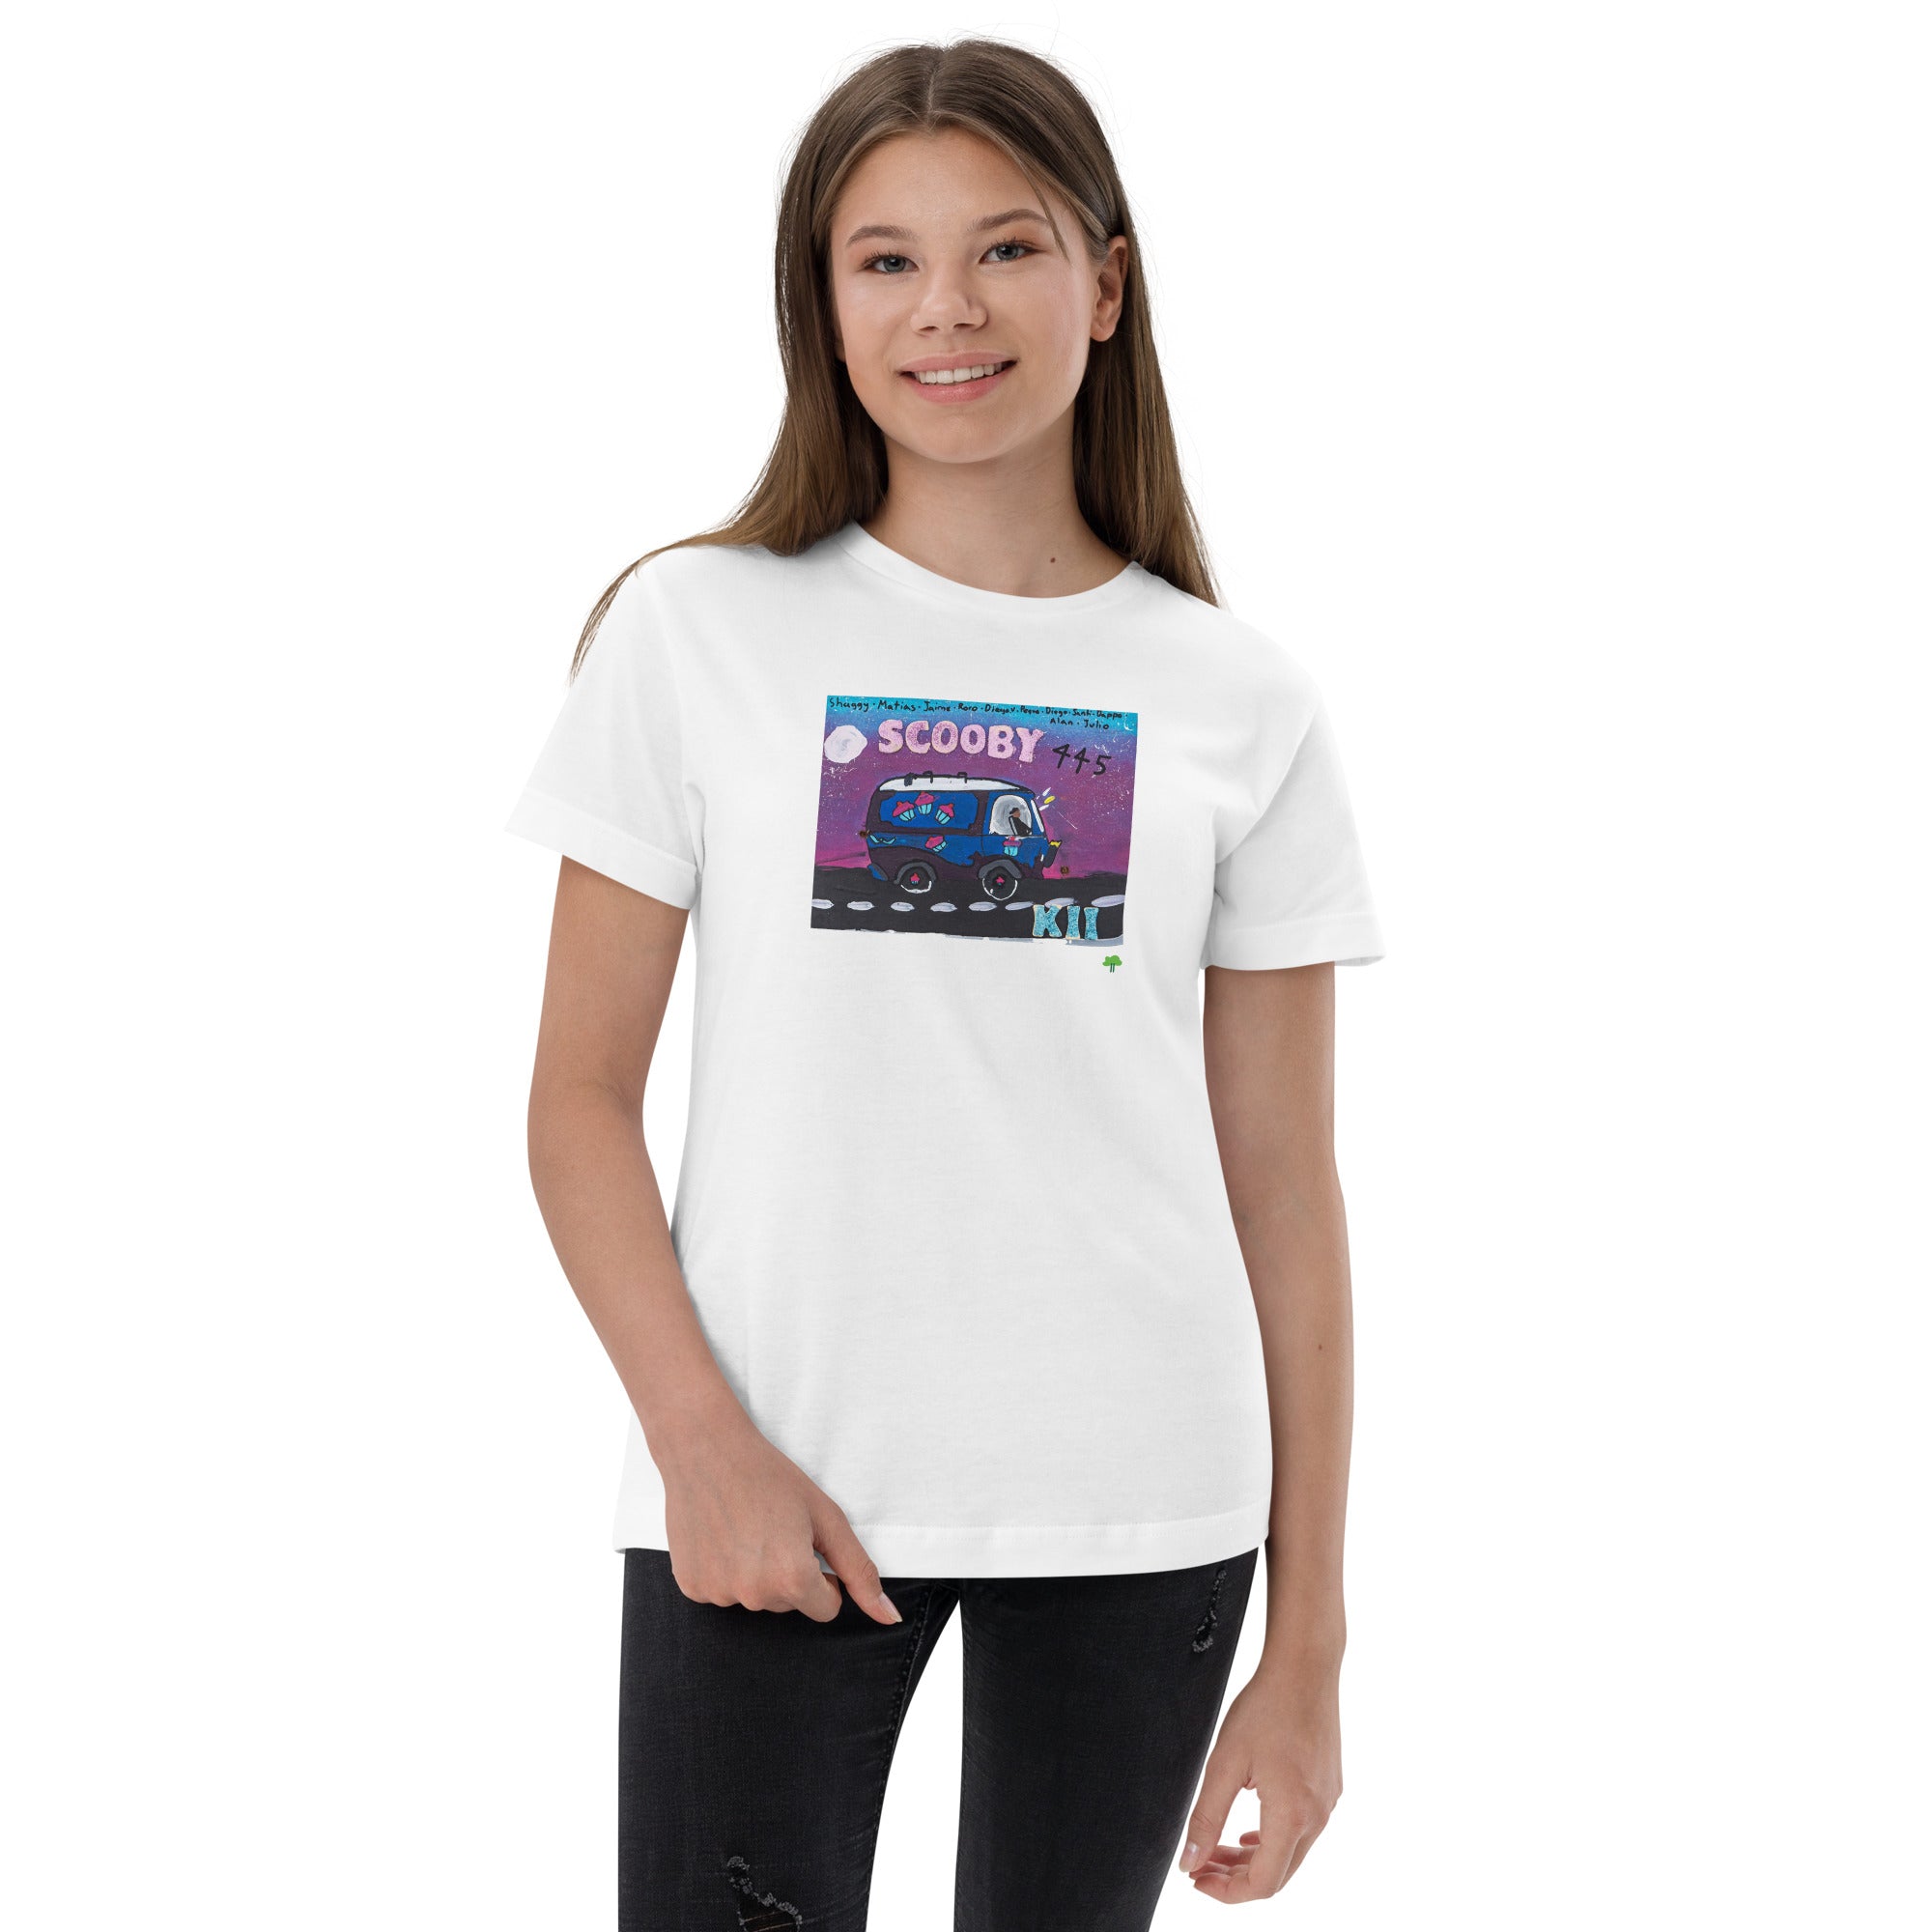 II Temp - Sabana - K11 | Youth jersey t-shirt